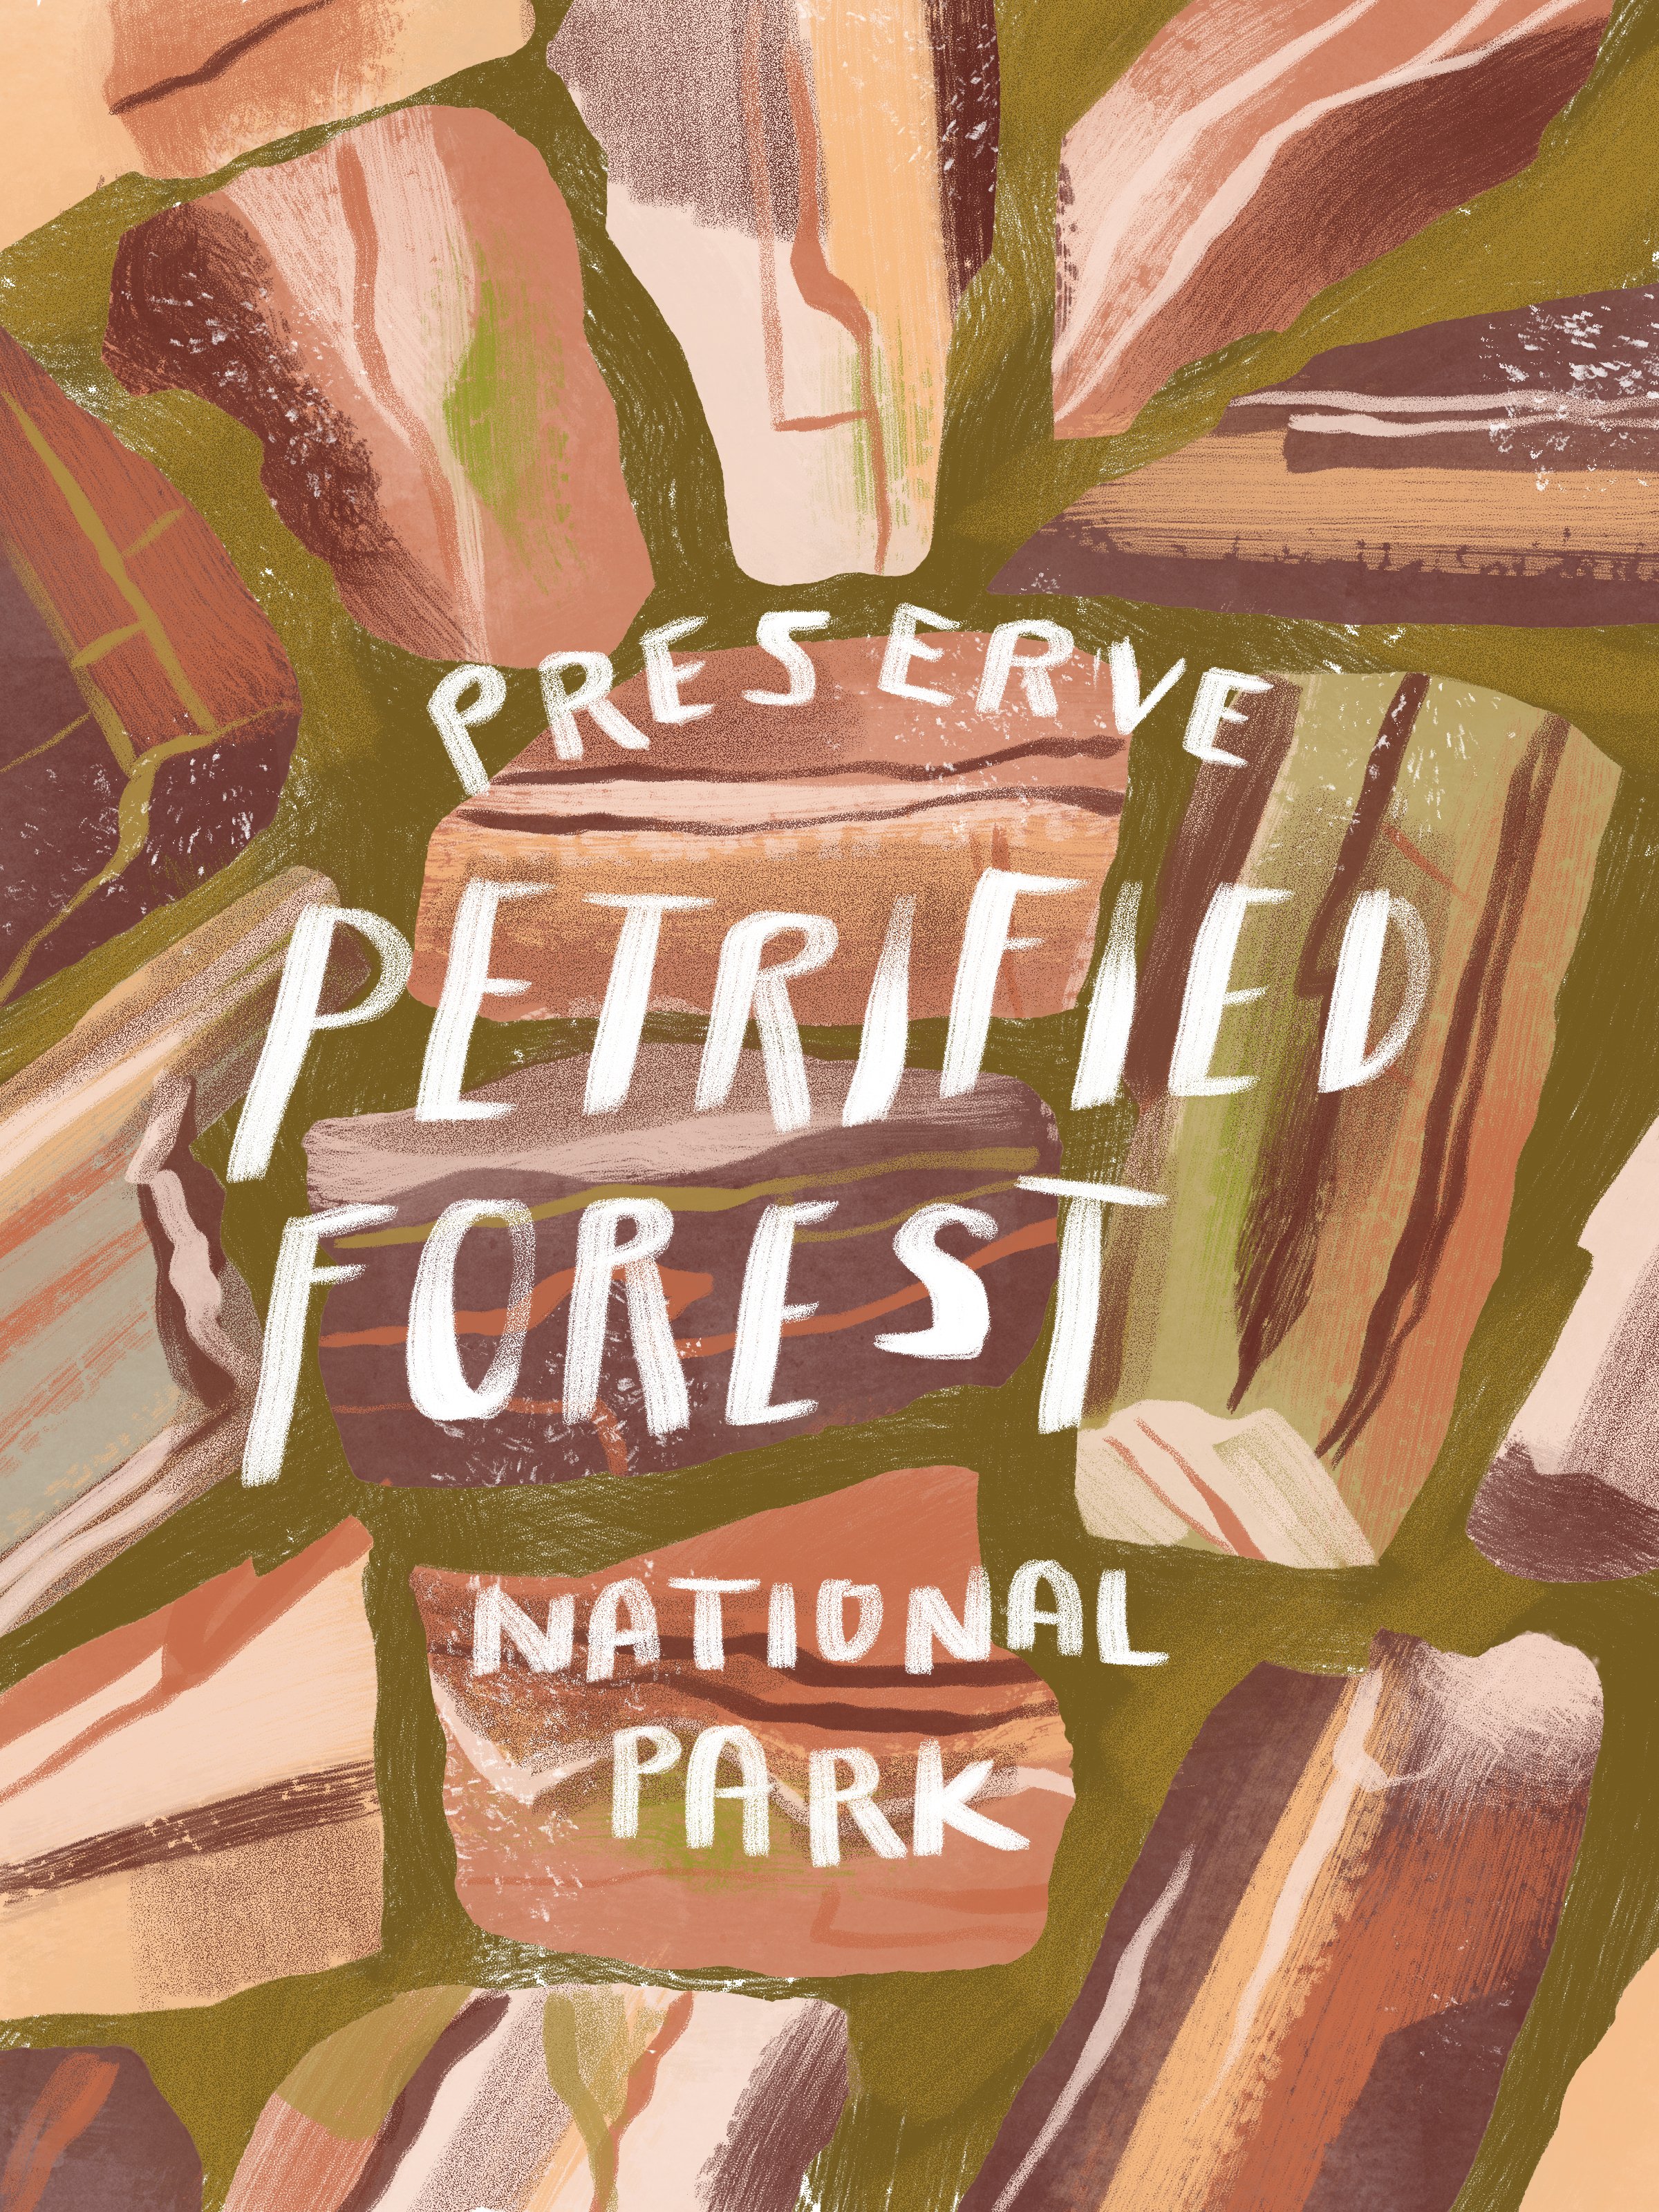 Western Road Trip Stickers- Petrified Forest.jpg